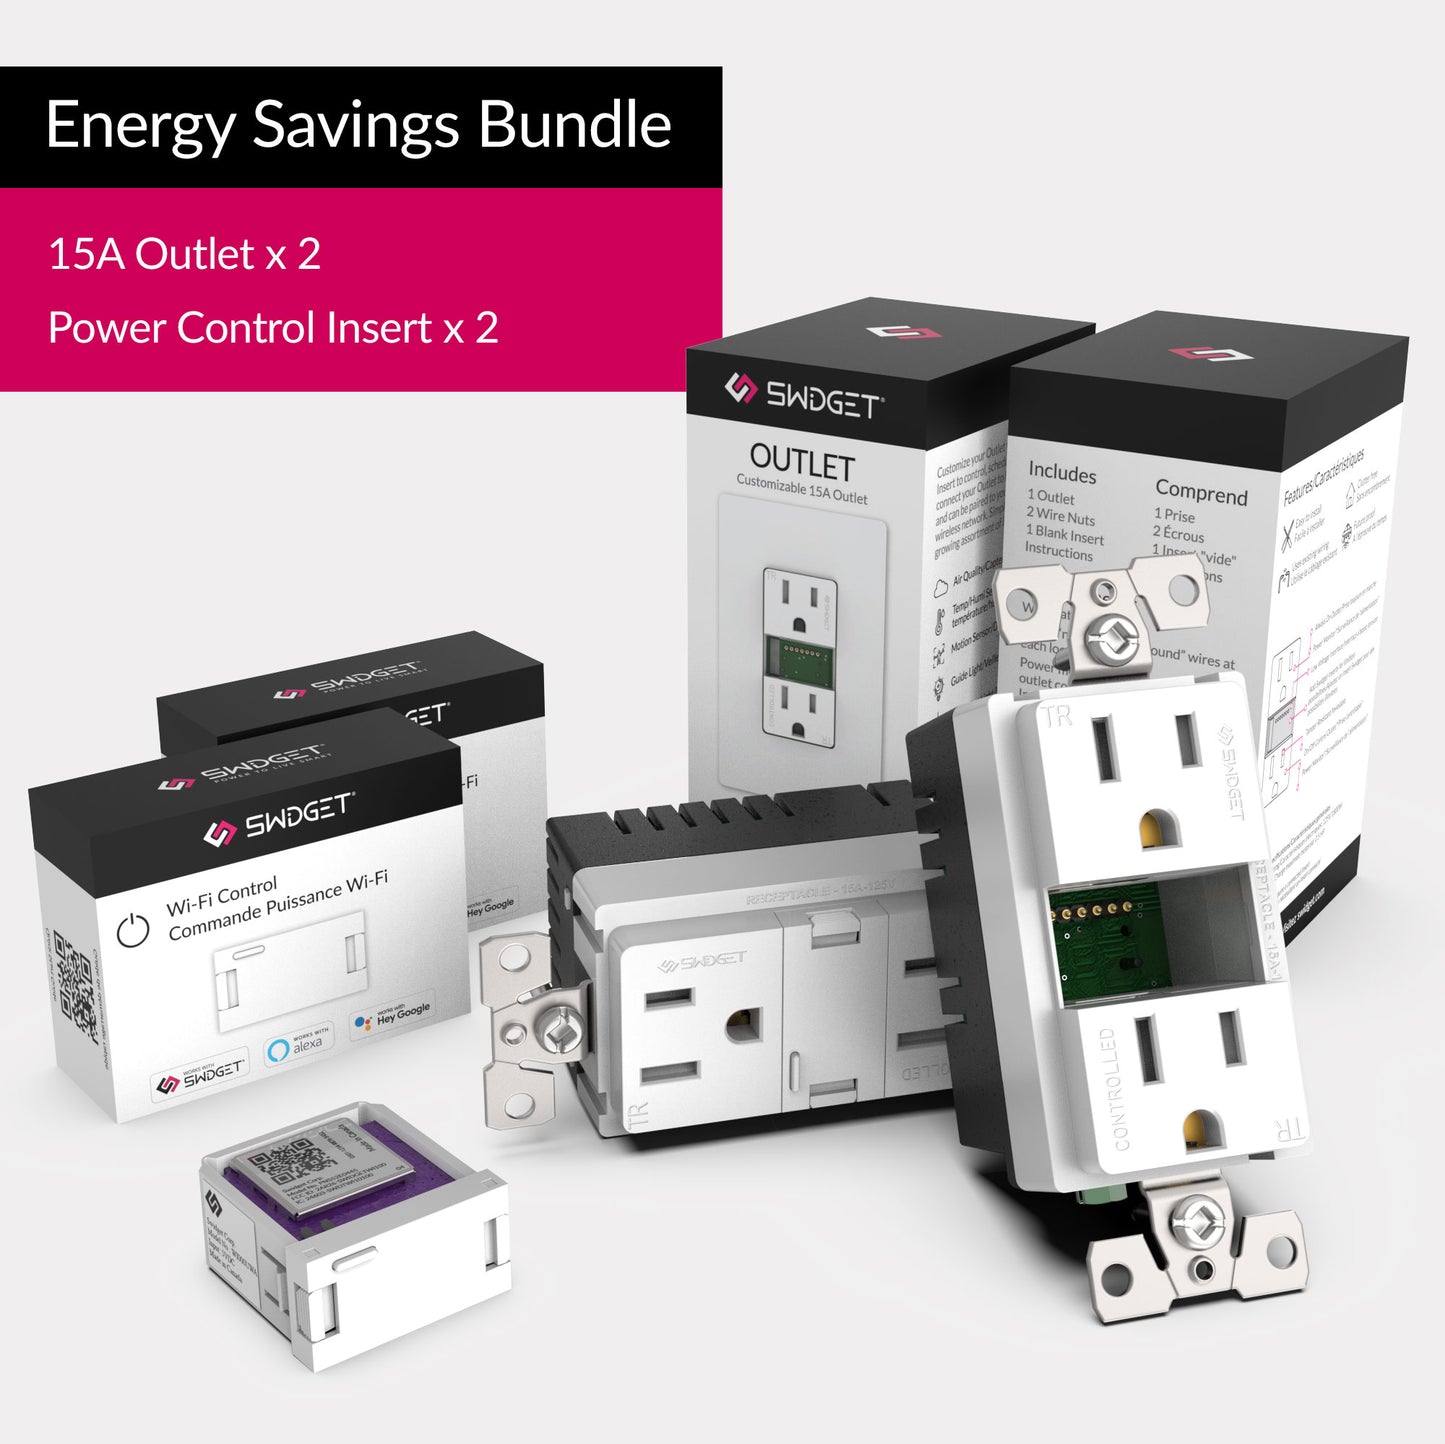 Energy Savings Bundle